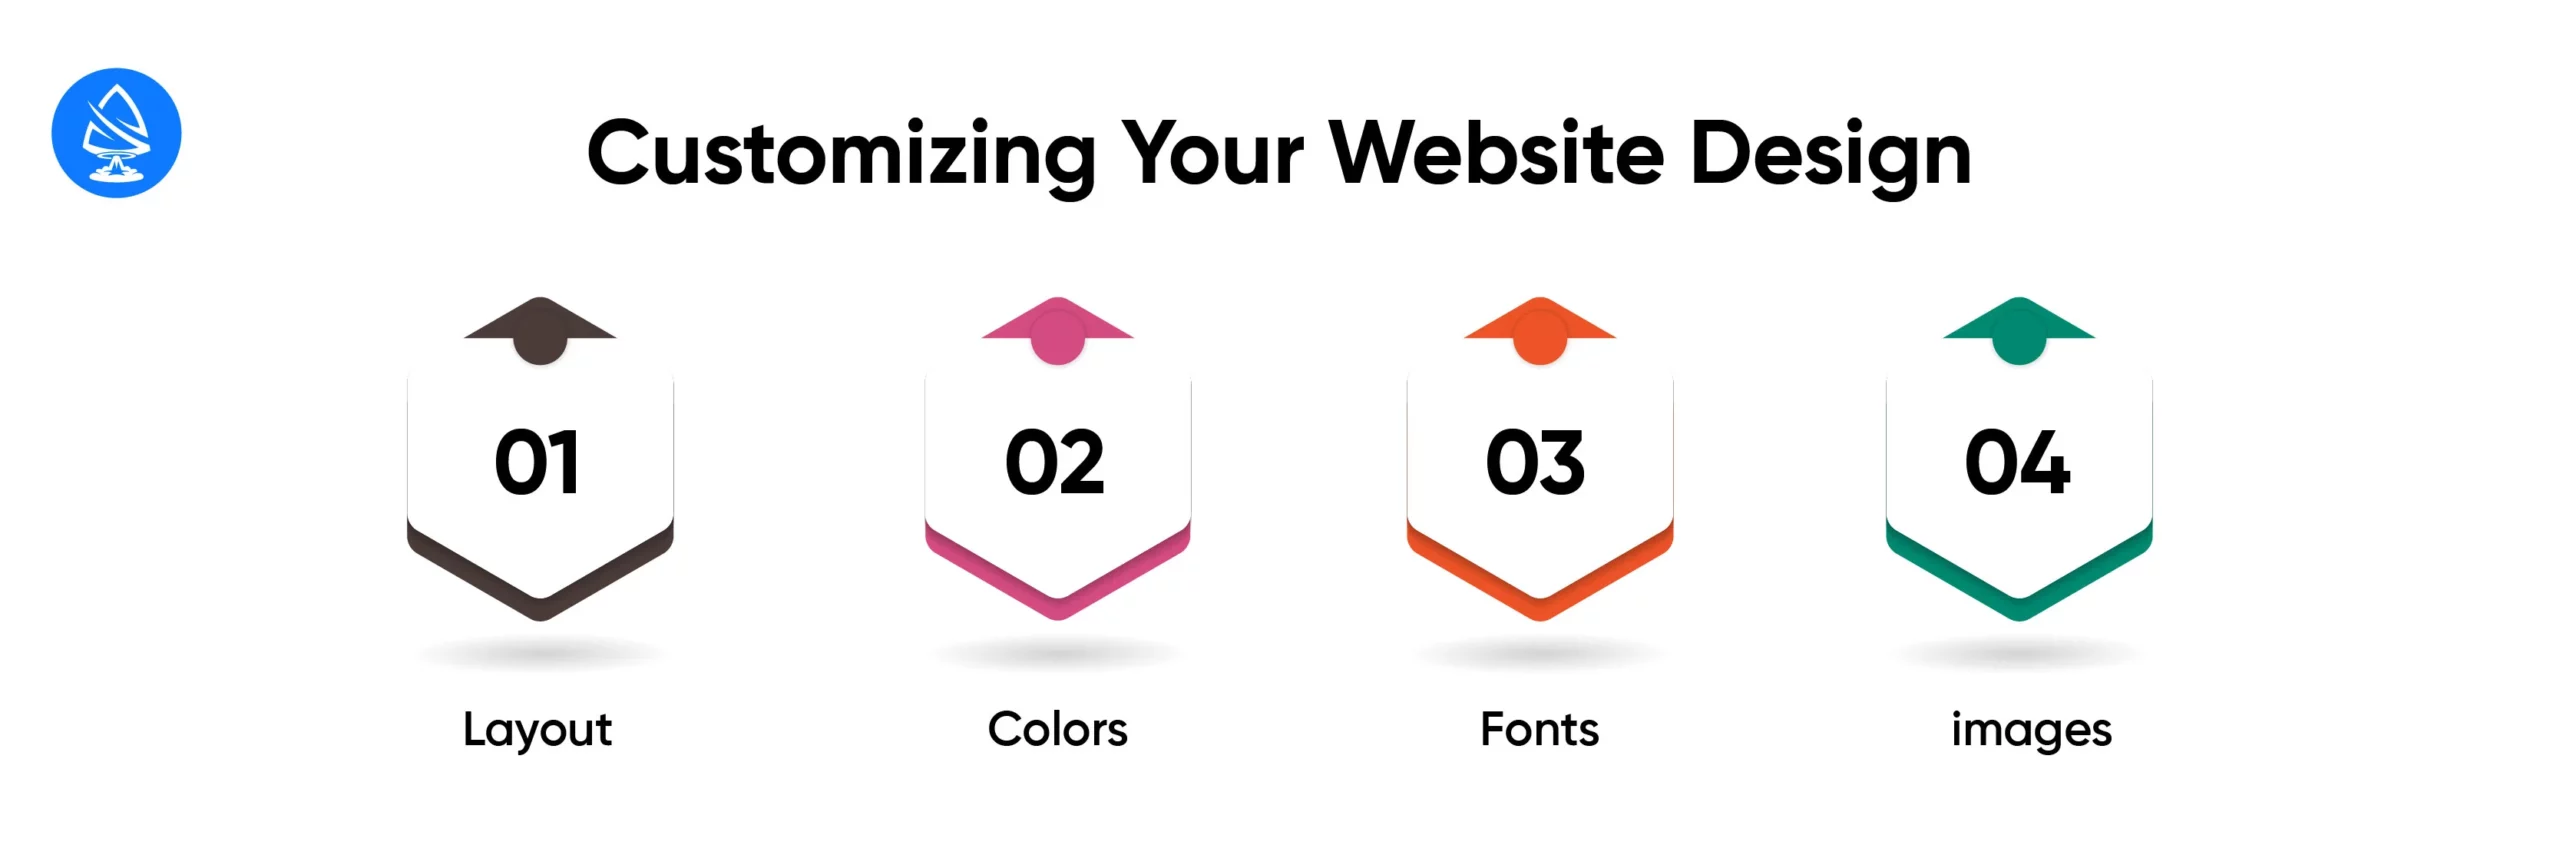 Customizing Your Website Design 